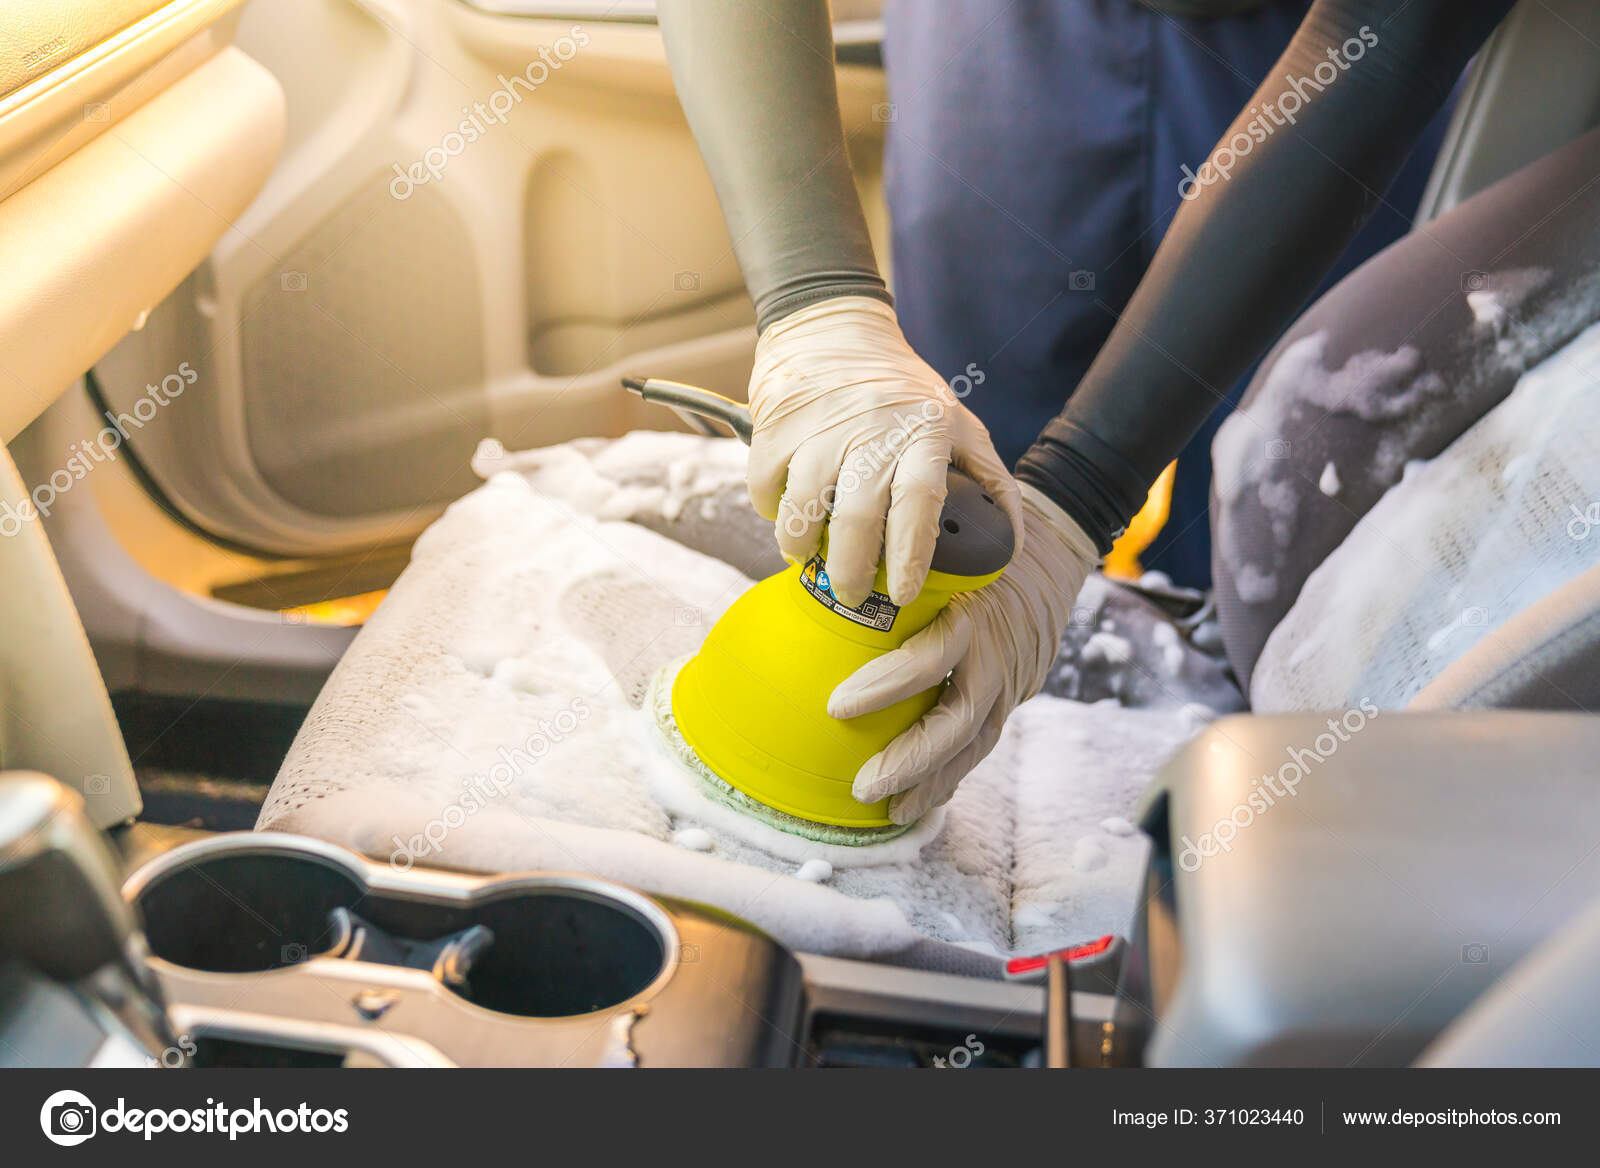 Car Interior Cleaning Foam Simplifies Cleaning Effortlessly